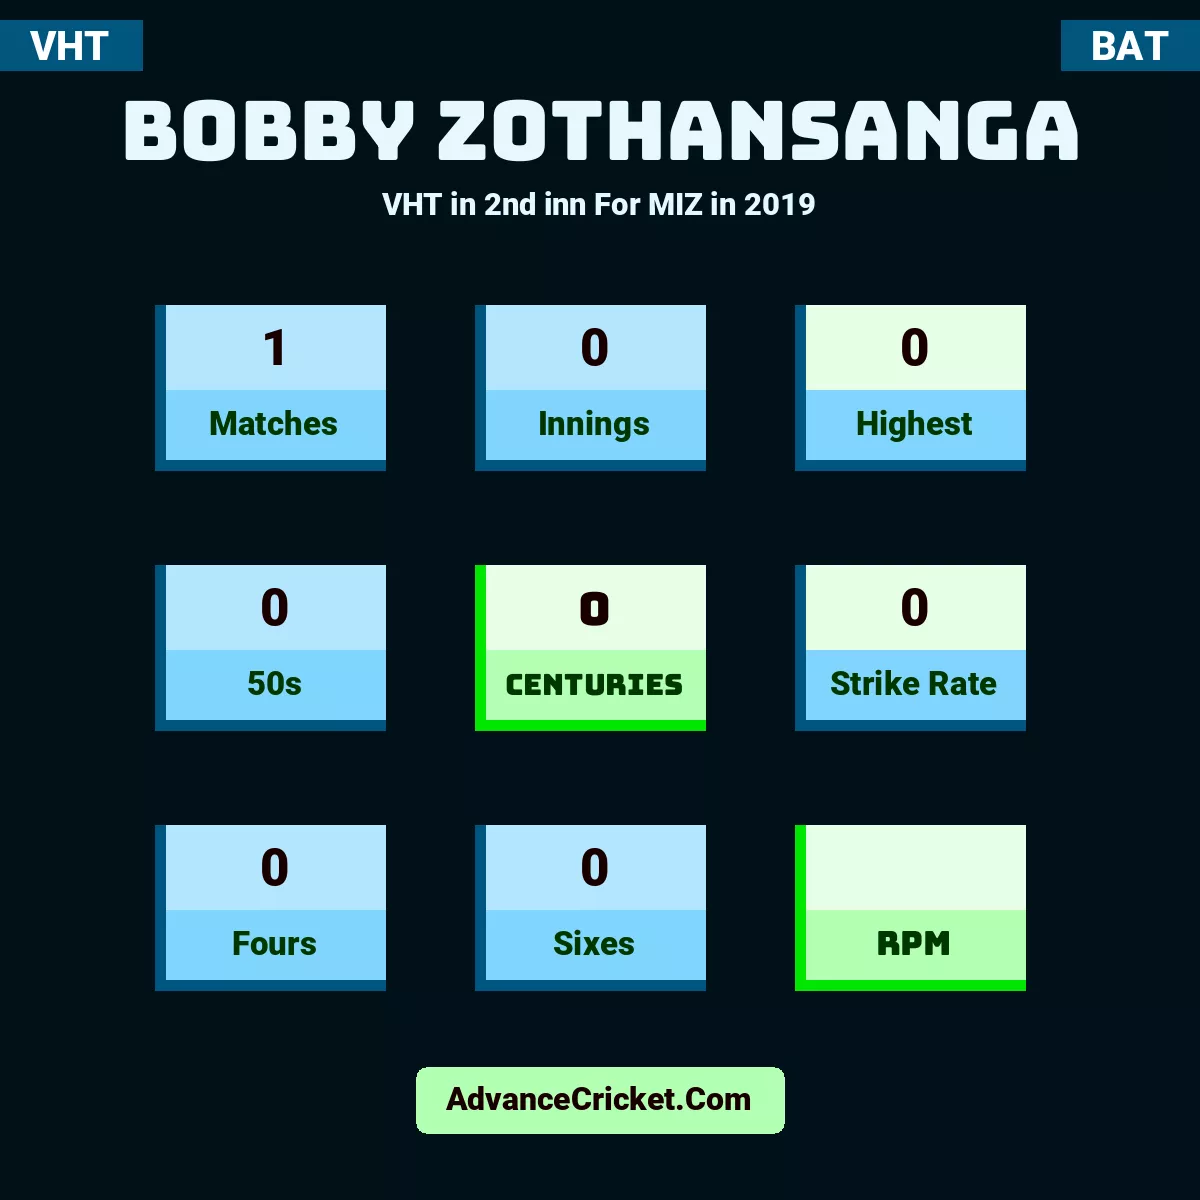 Bobby Zothansanga VHT  in 2nd inn For MIZ in 2019, Bobby Zothansanga played 1 matches, scored 0 runs as highest, 0 half-centuries, and 0 centuries, with a strike rate of 0. B.Zothansanga hit 0 fours and 0 sixes.